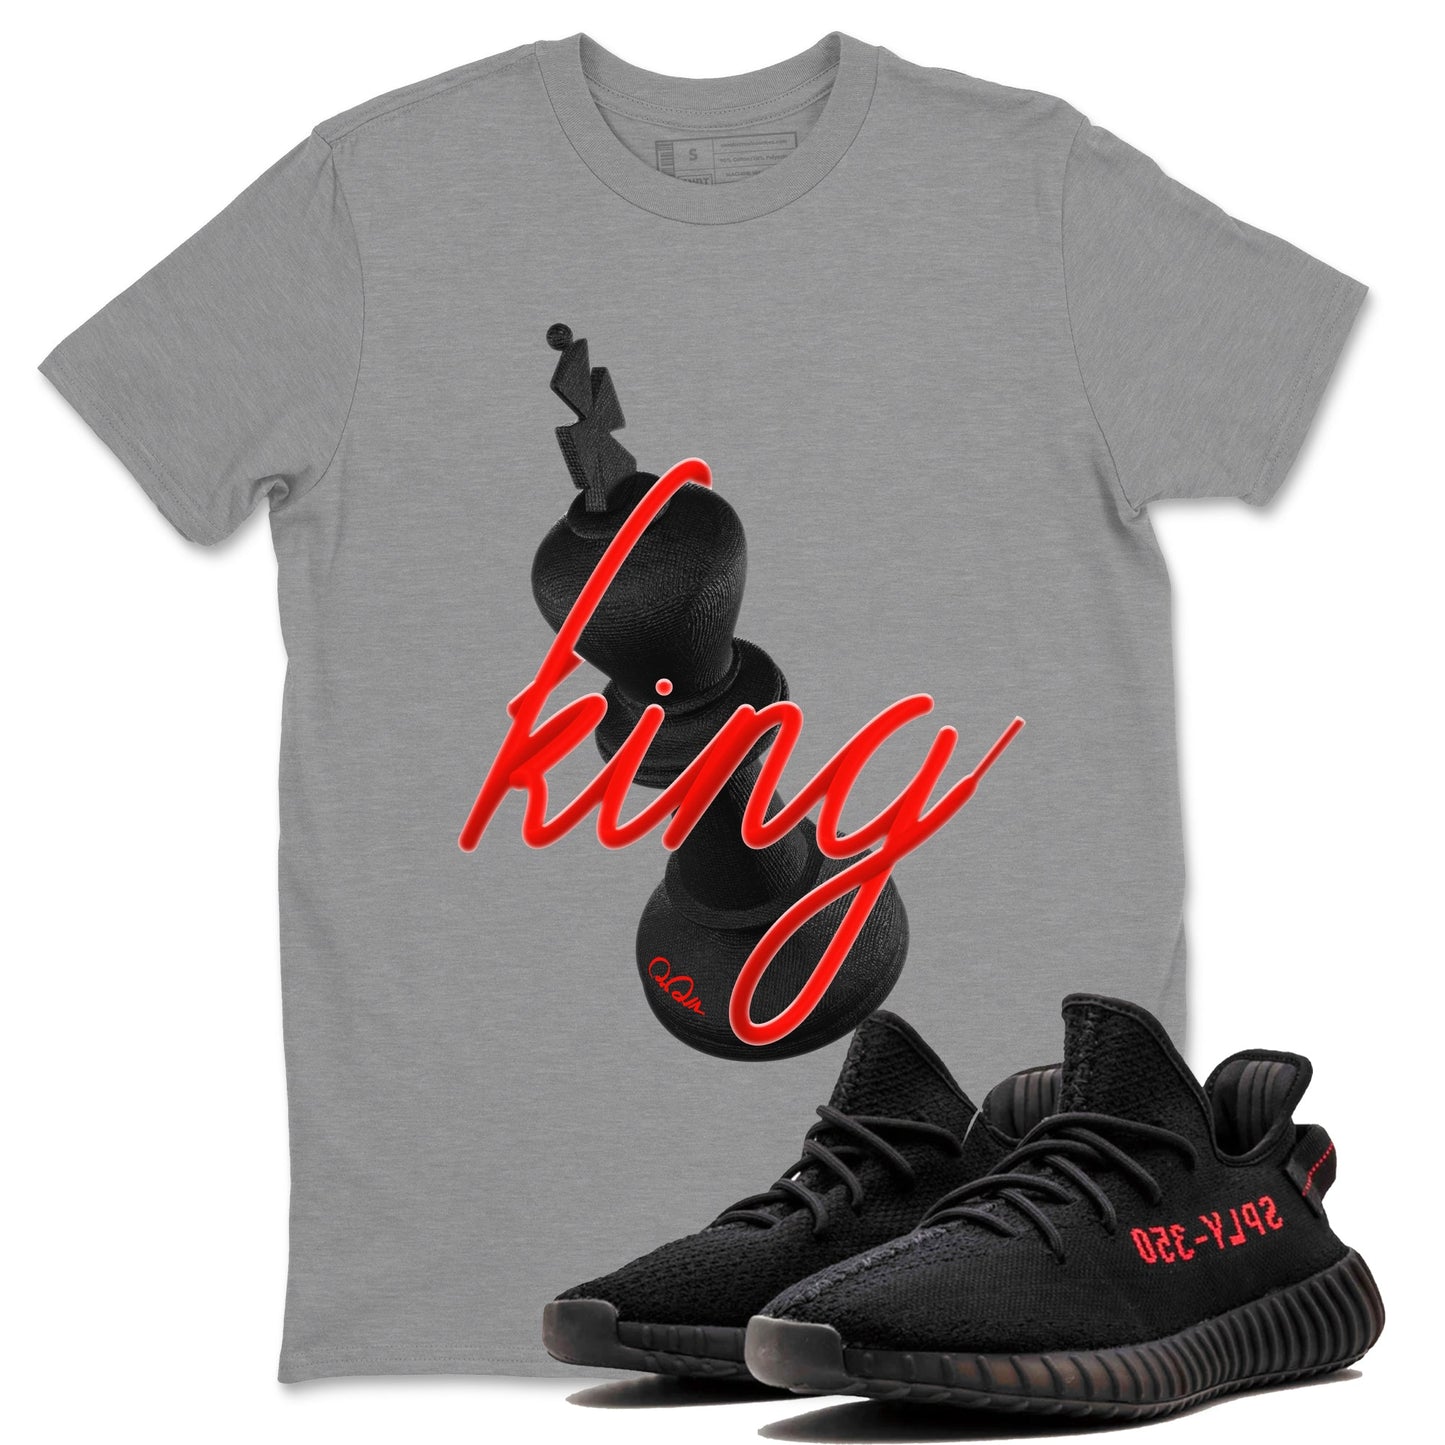 Yeezy 350 Bred shirt to match jordans 3D King Streetwear Sneaker Shirt Adidas Yeezy Boost V2 350 Bred Drip Gear Zone Sneaker Matching Clothing Unisex Heather Grey 1 T-Shirt